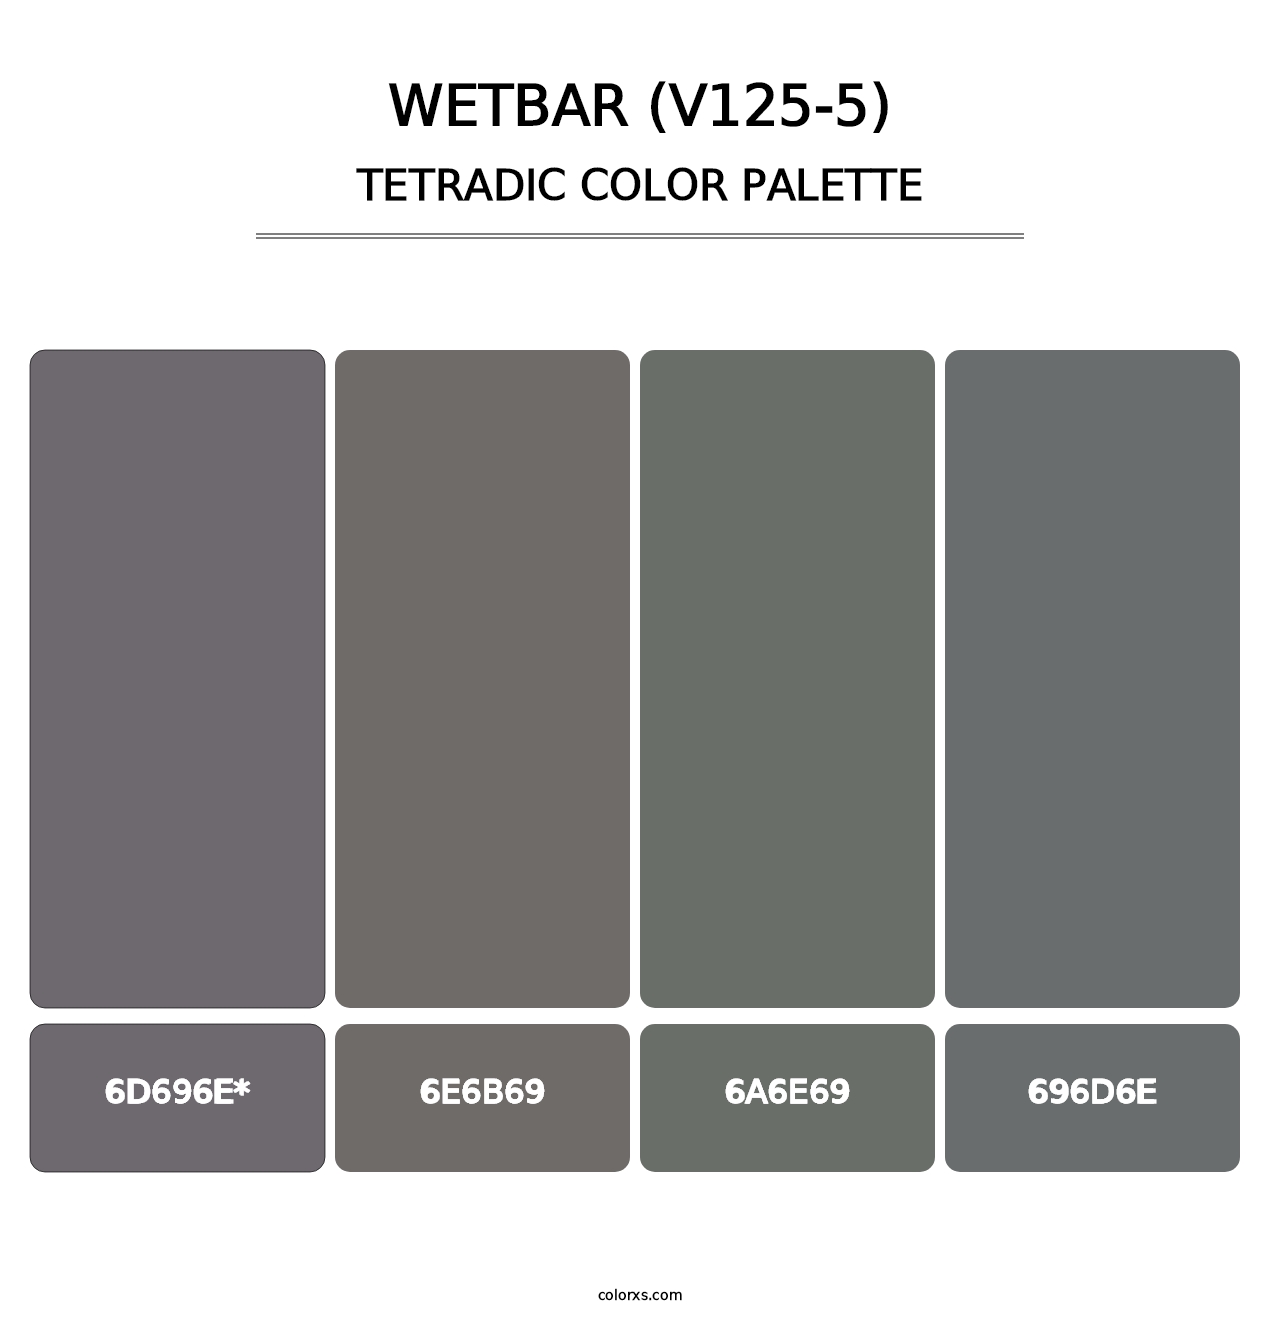 Wetbar (V125-5) - Tetradic Color Palette